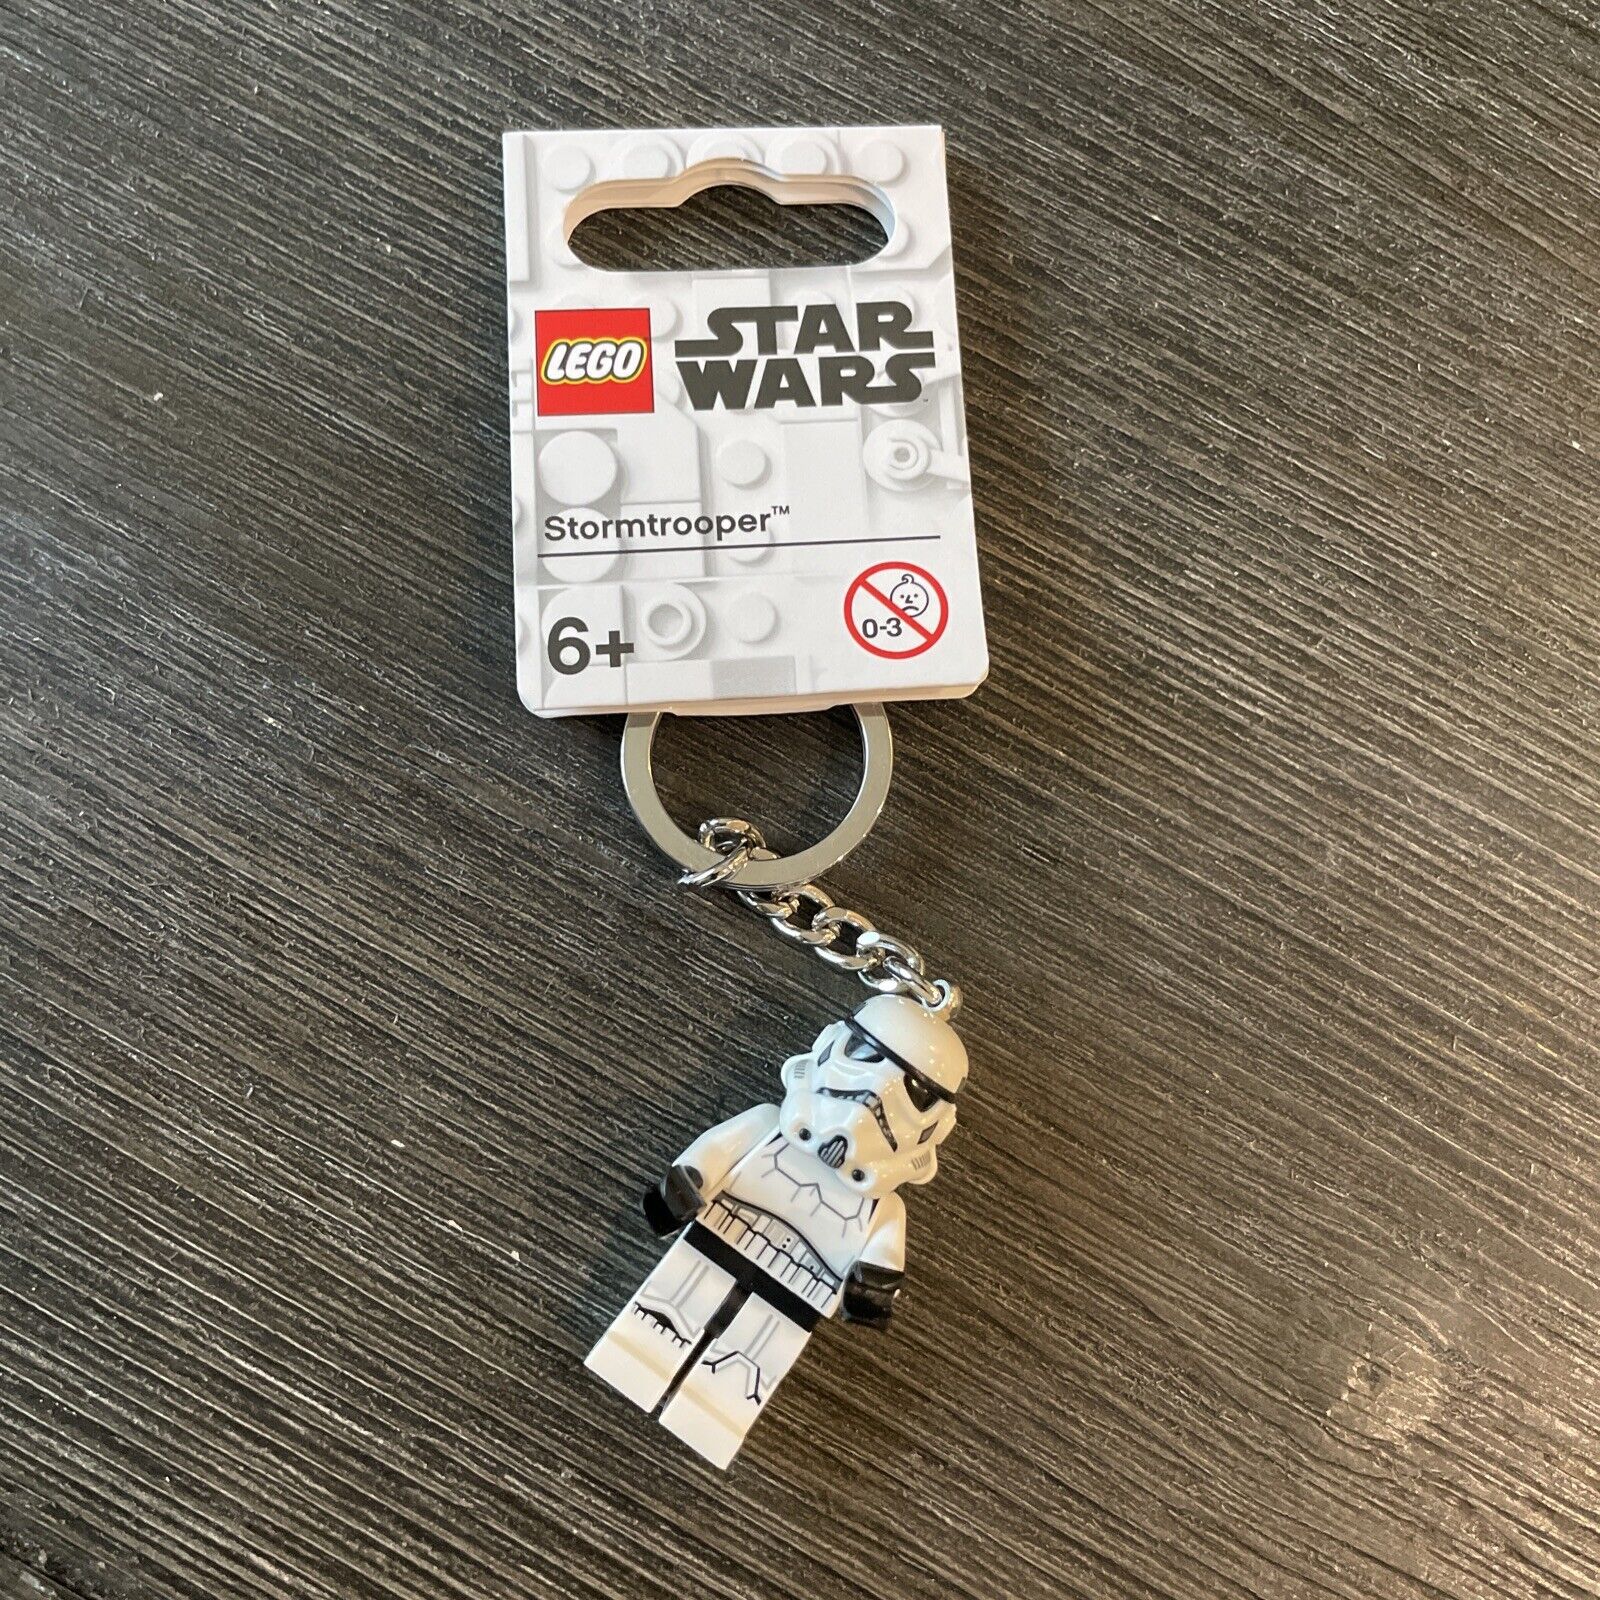 LEGO Star Wars White Black Stormtrooper Keychain 853946 New FREE SHIPPING!